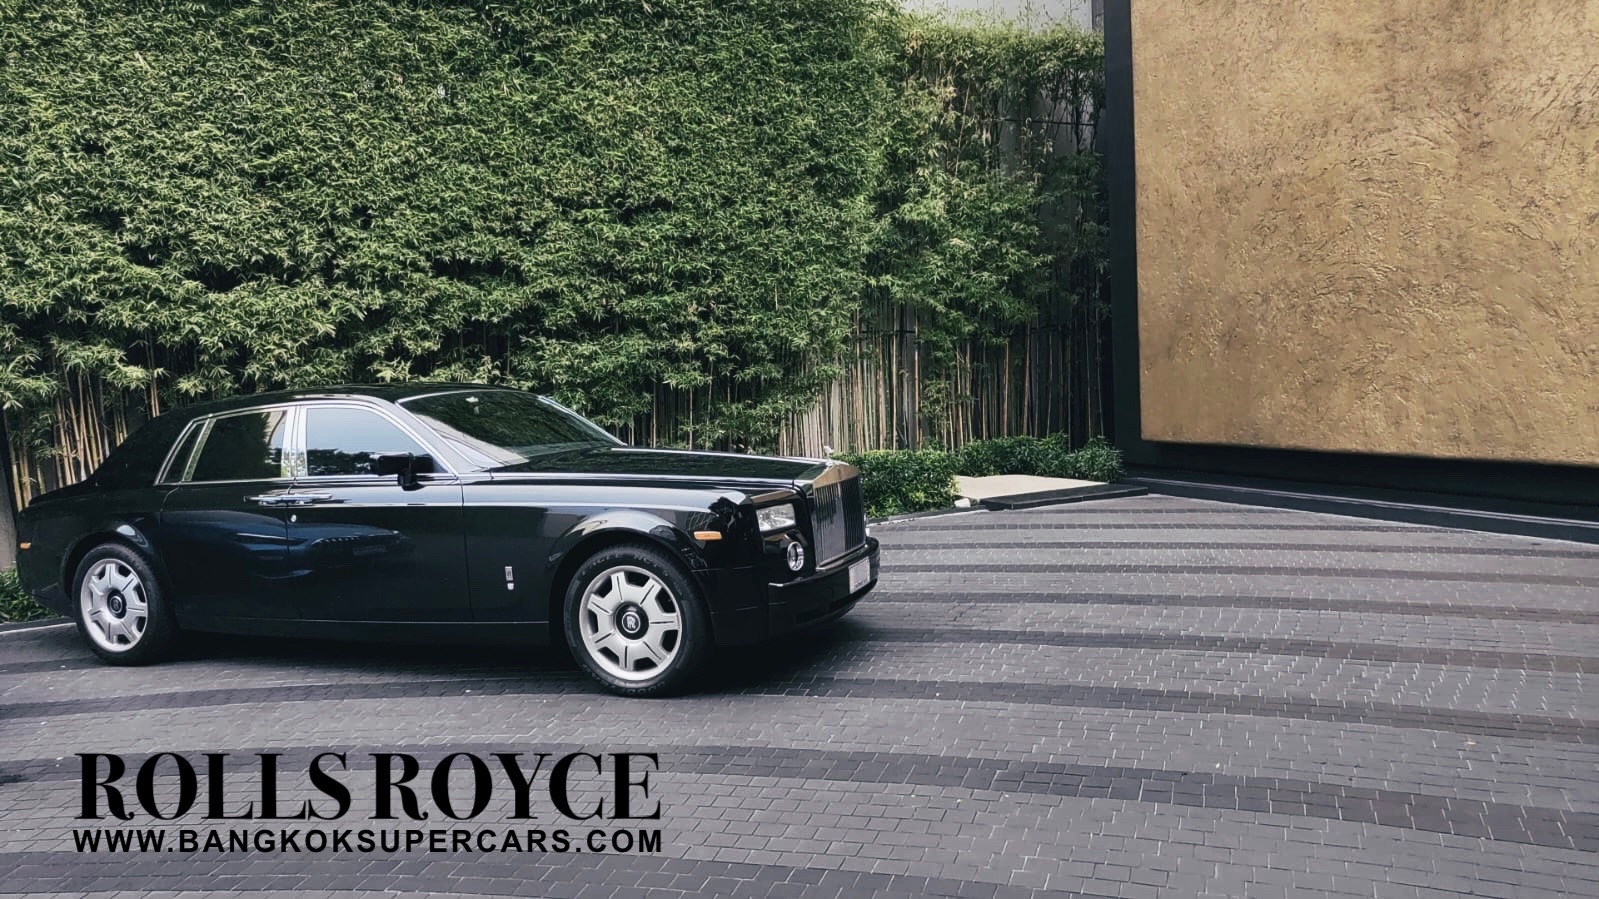 Rolls Royce Rental Thailand